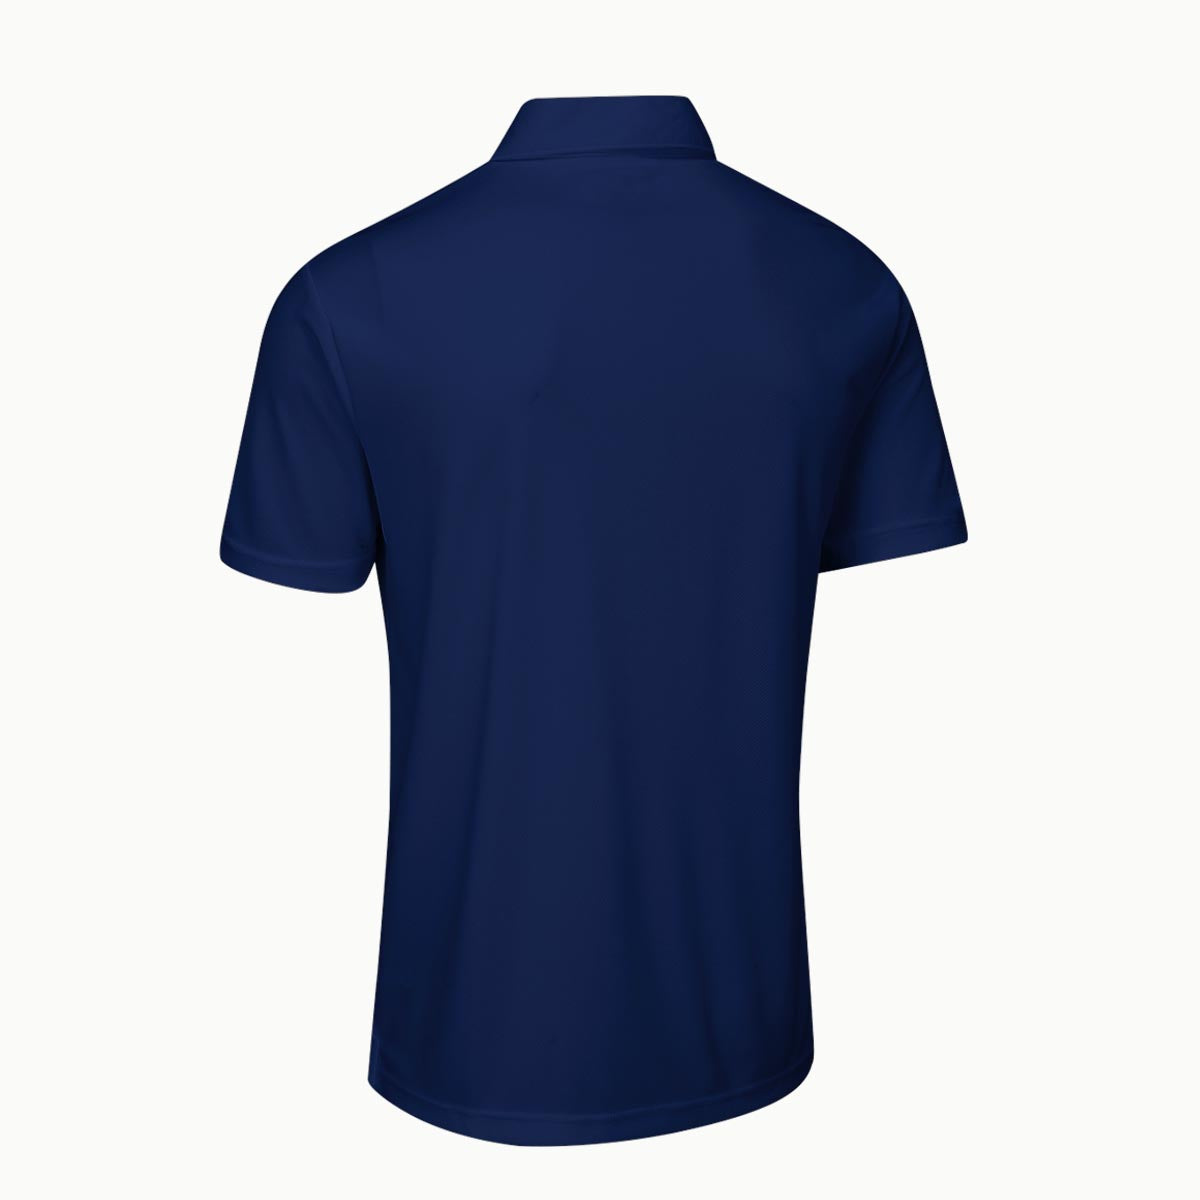 polo t shirt navy blue